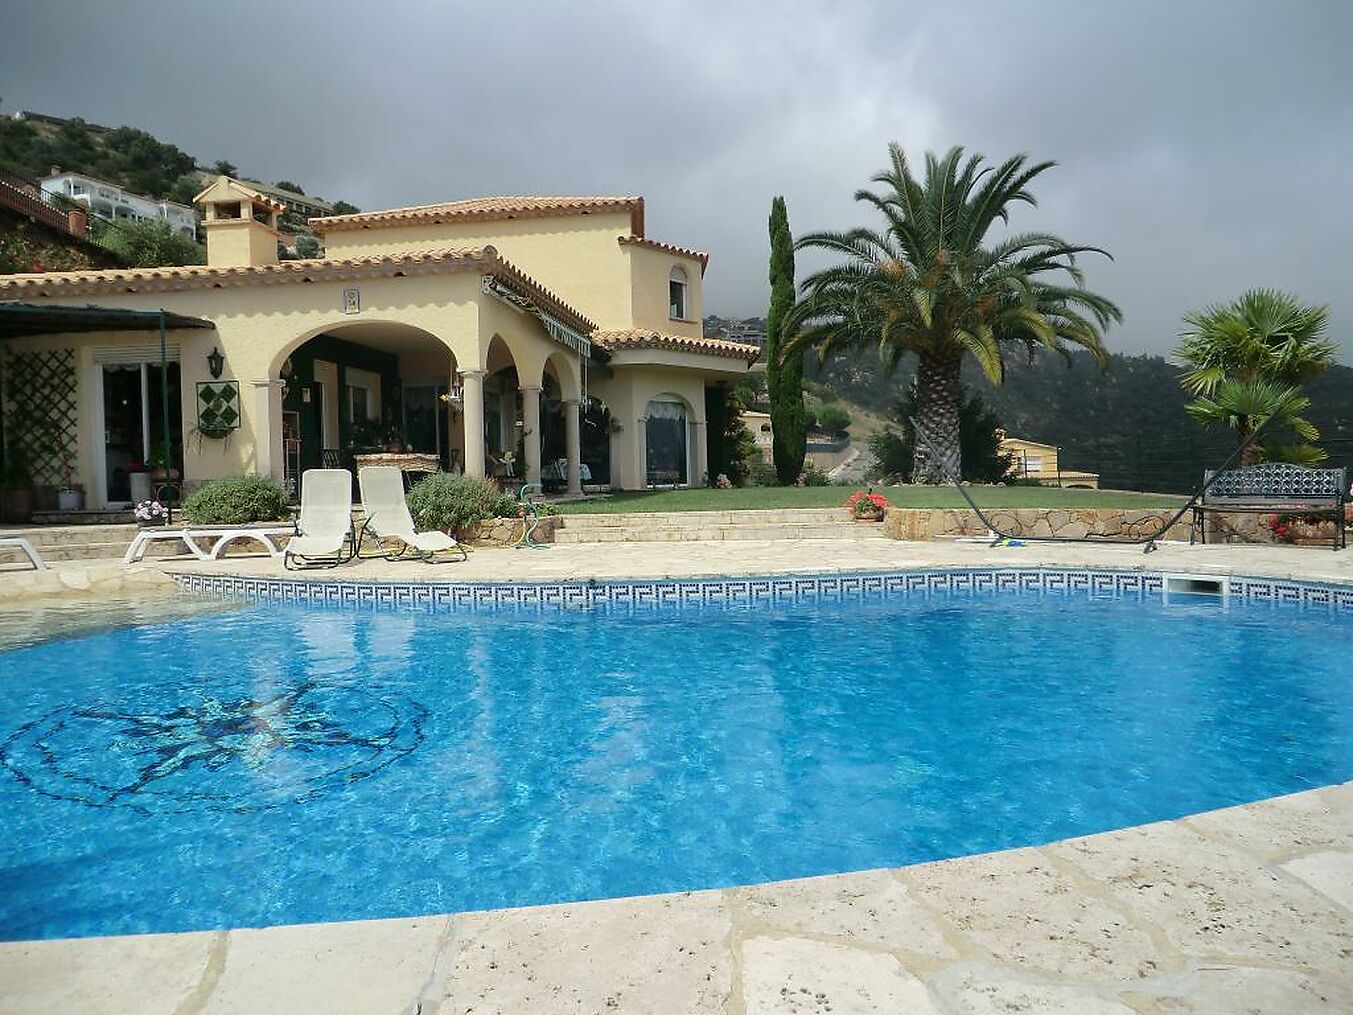 Stunning 3 bedroom villa for sale in Playa de Aro with incredible sea views.